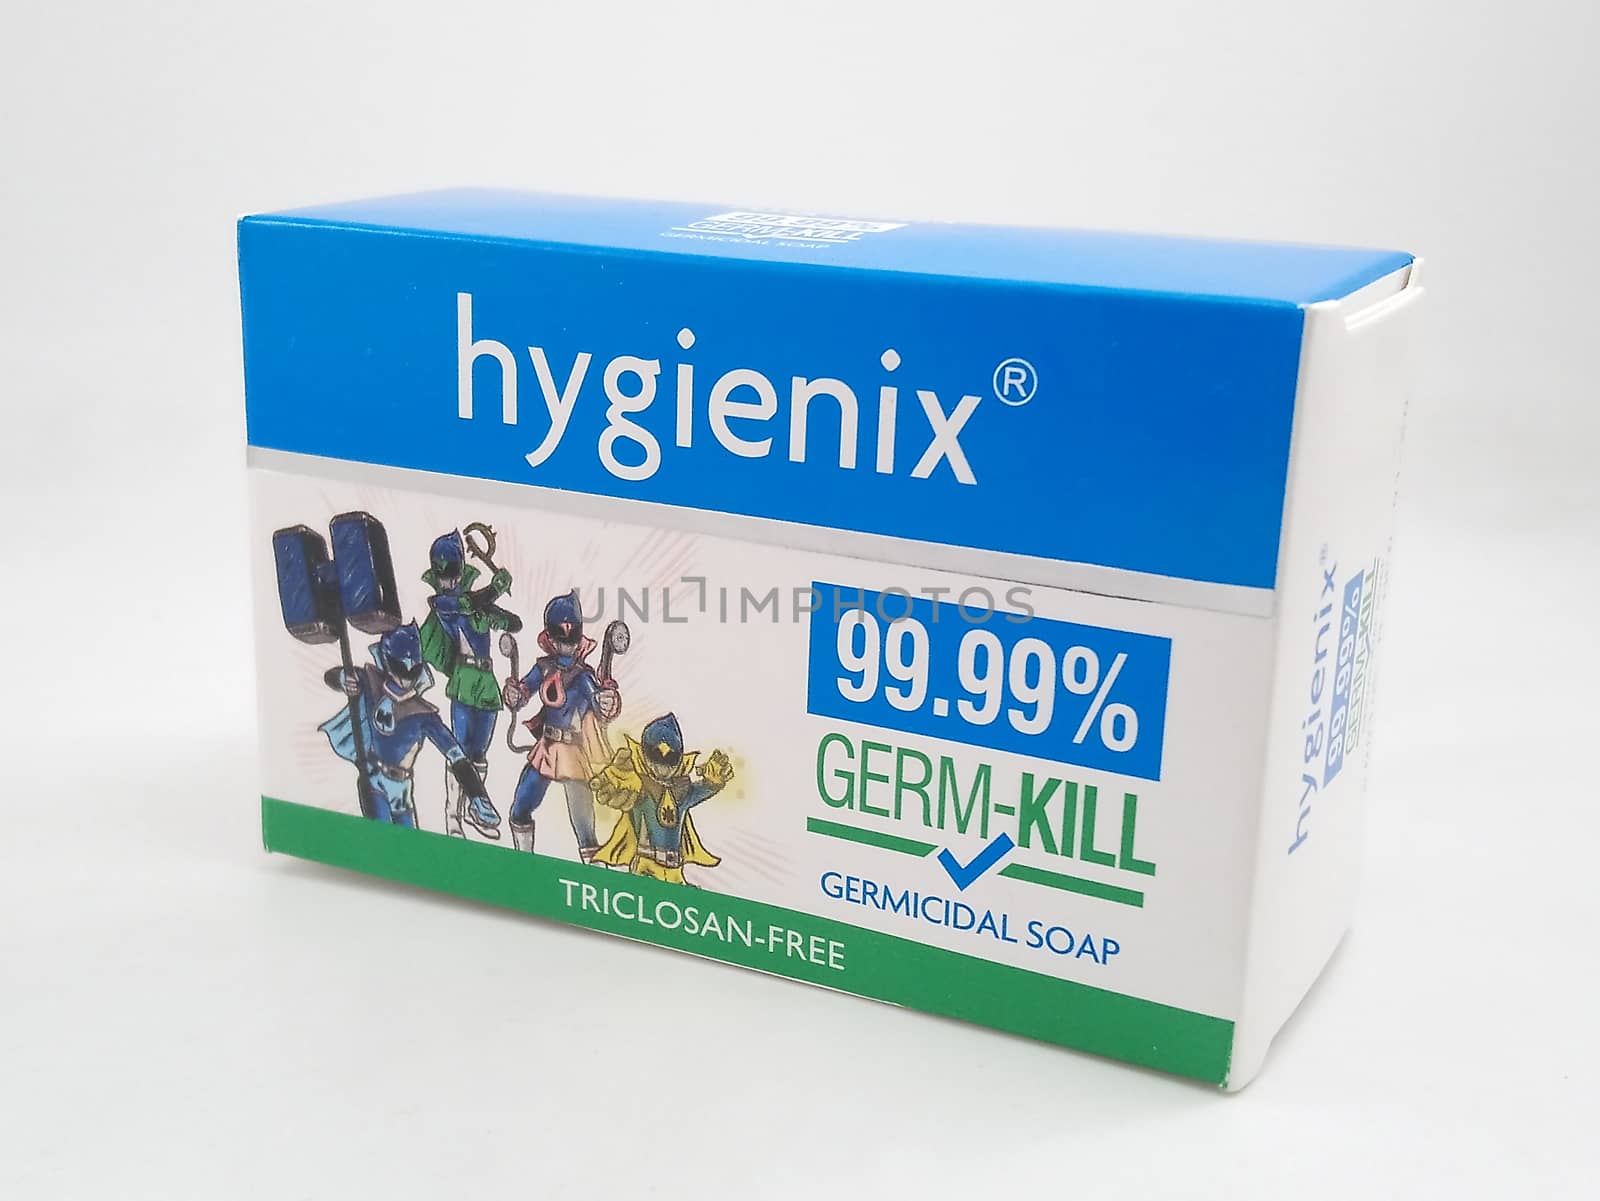 MANILA, PH - SEPT 22 - Hygienix germicidal soap on September 22, 2020 in Manila, Philippines.